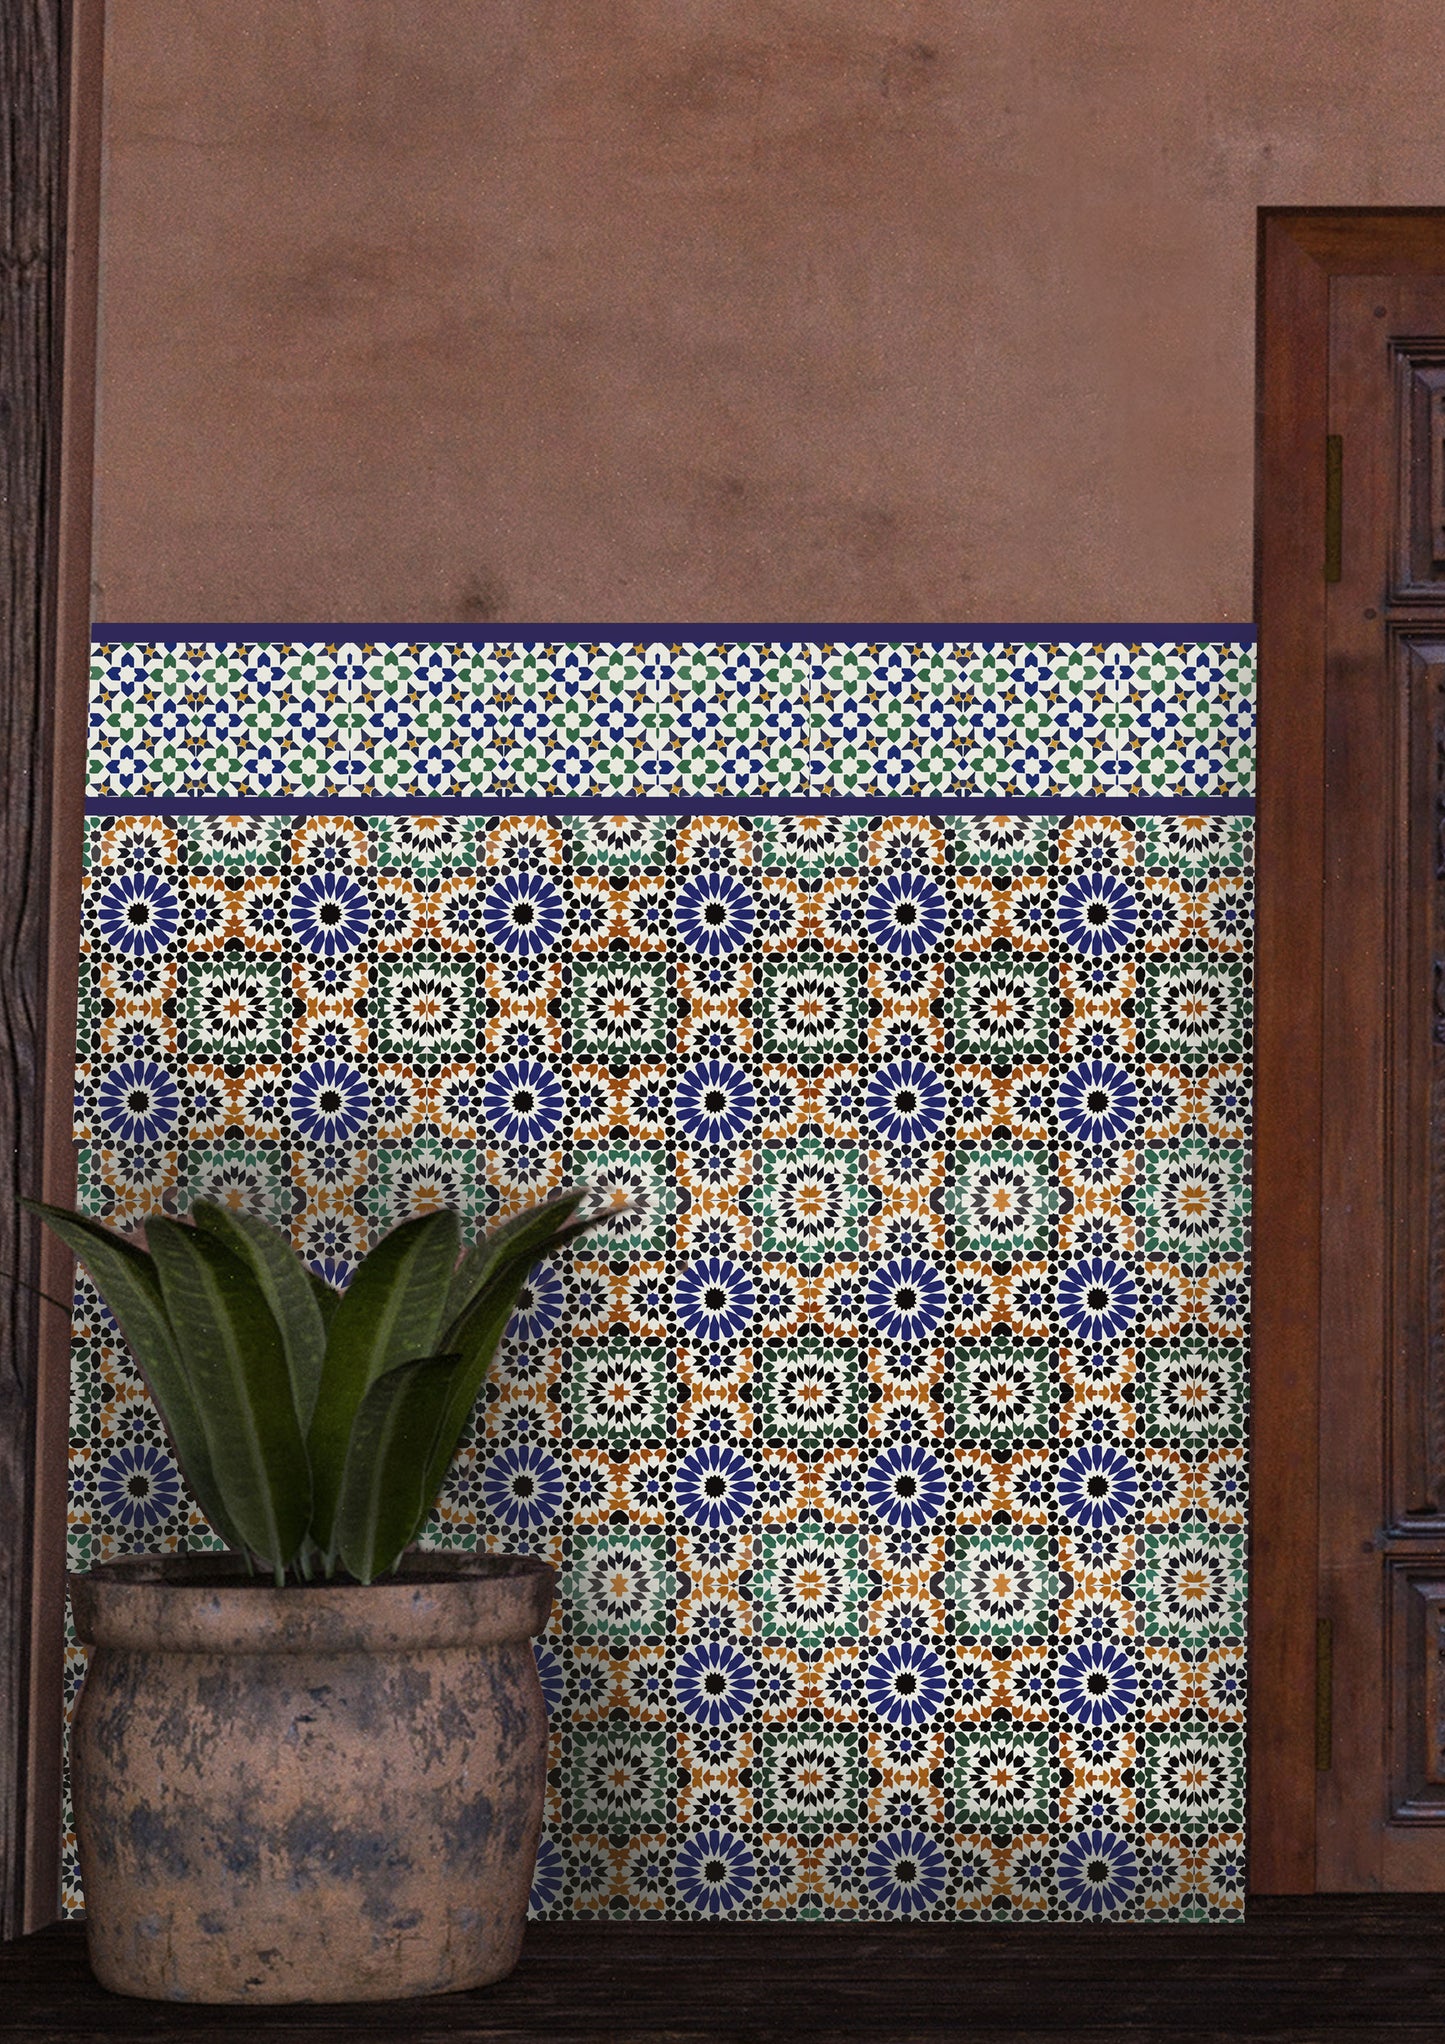 Moroccan Half Wall Wallpaper